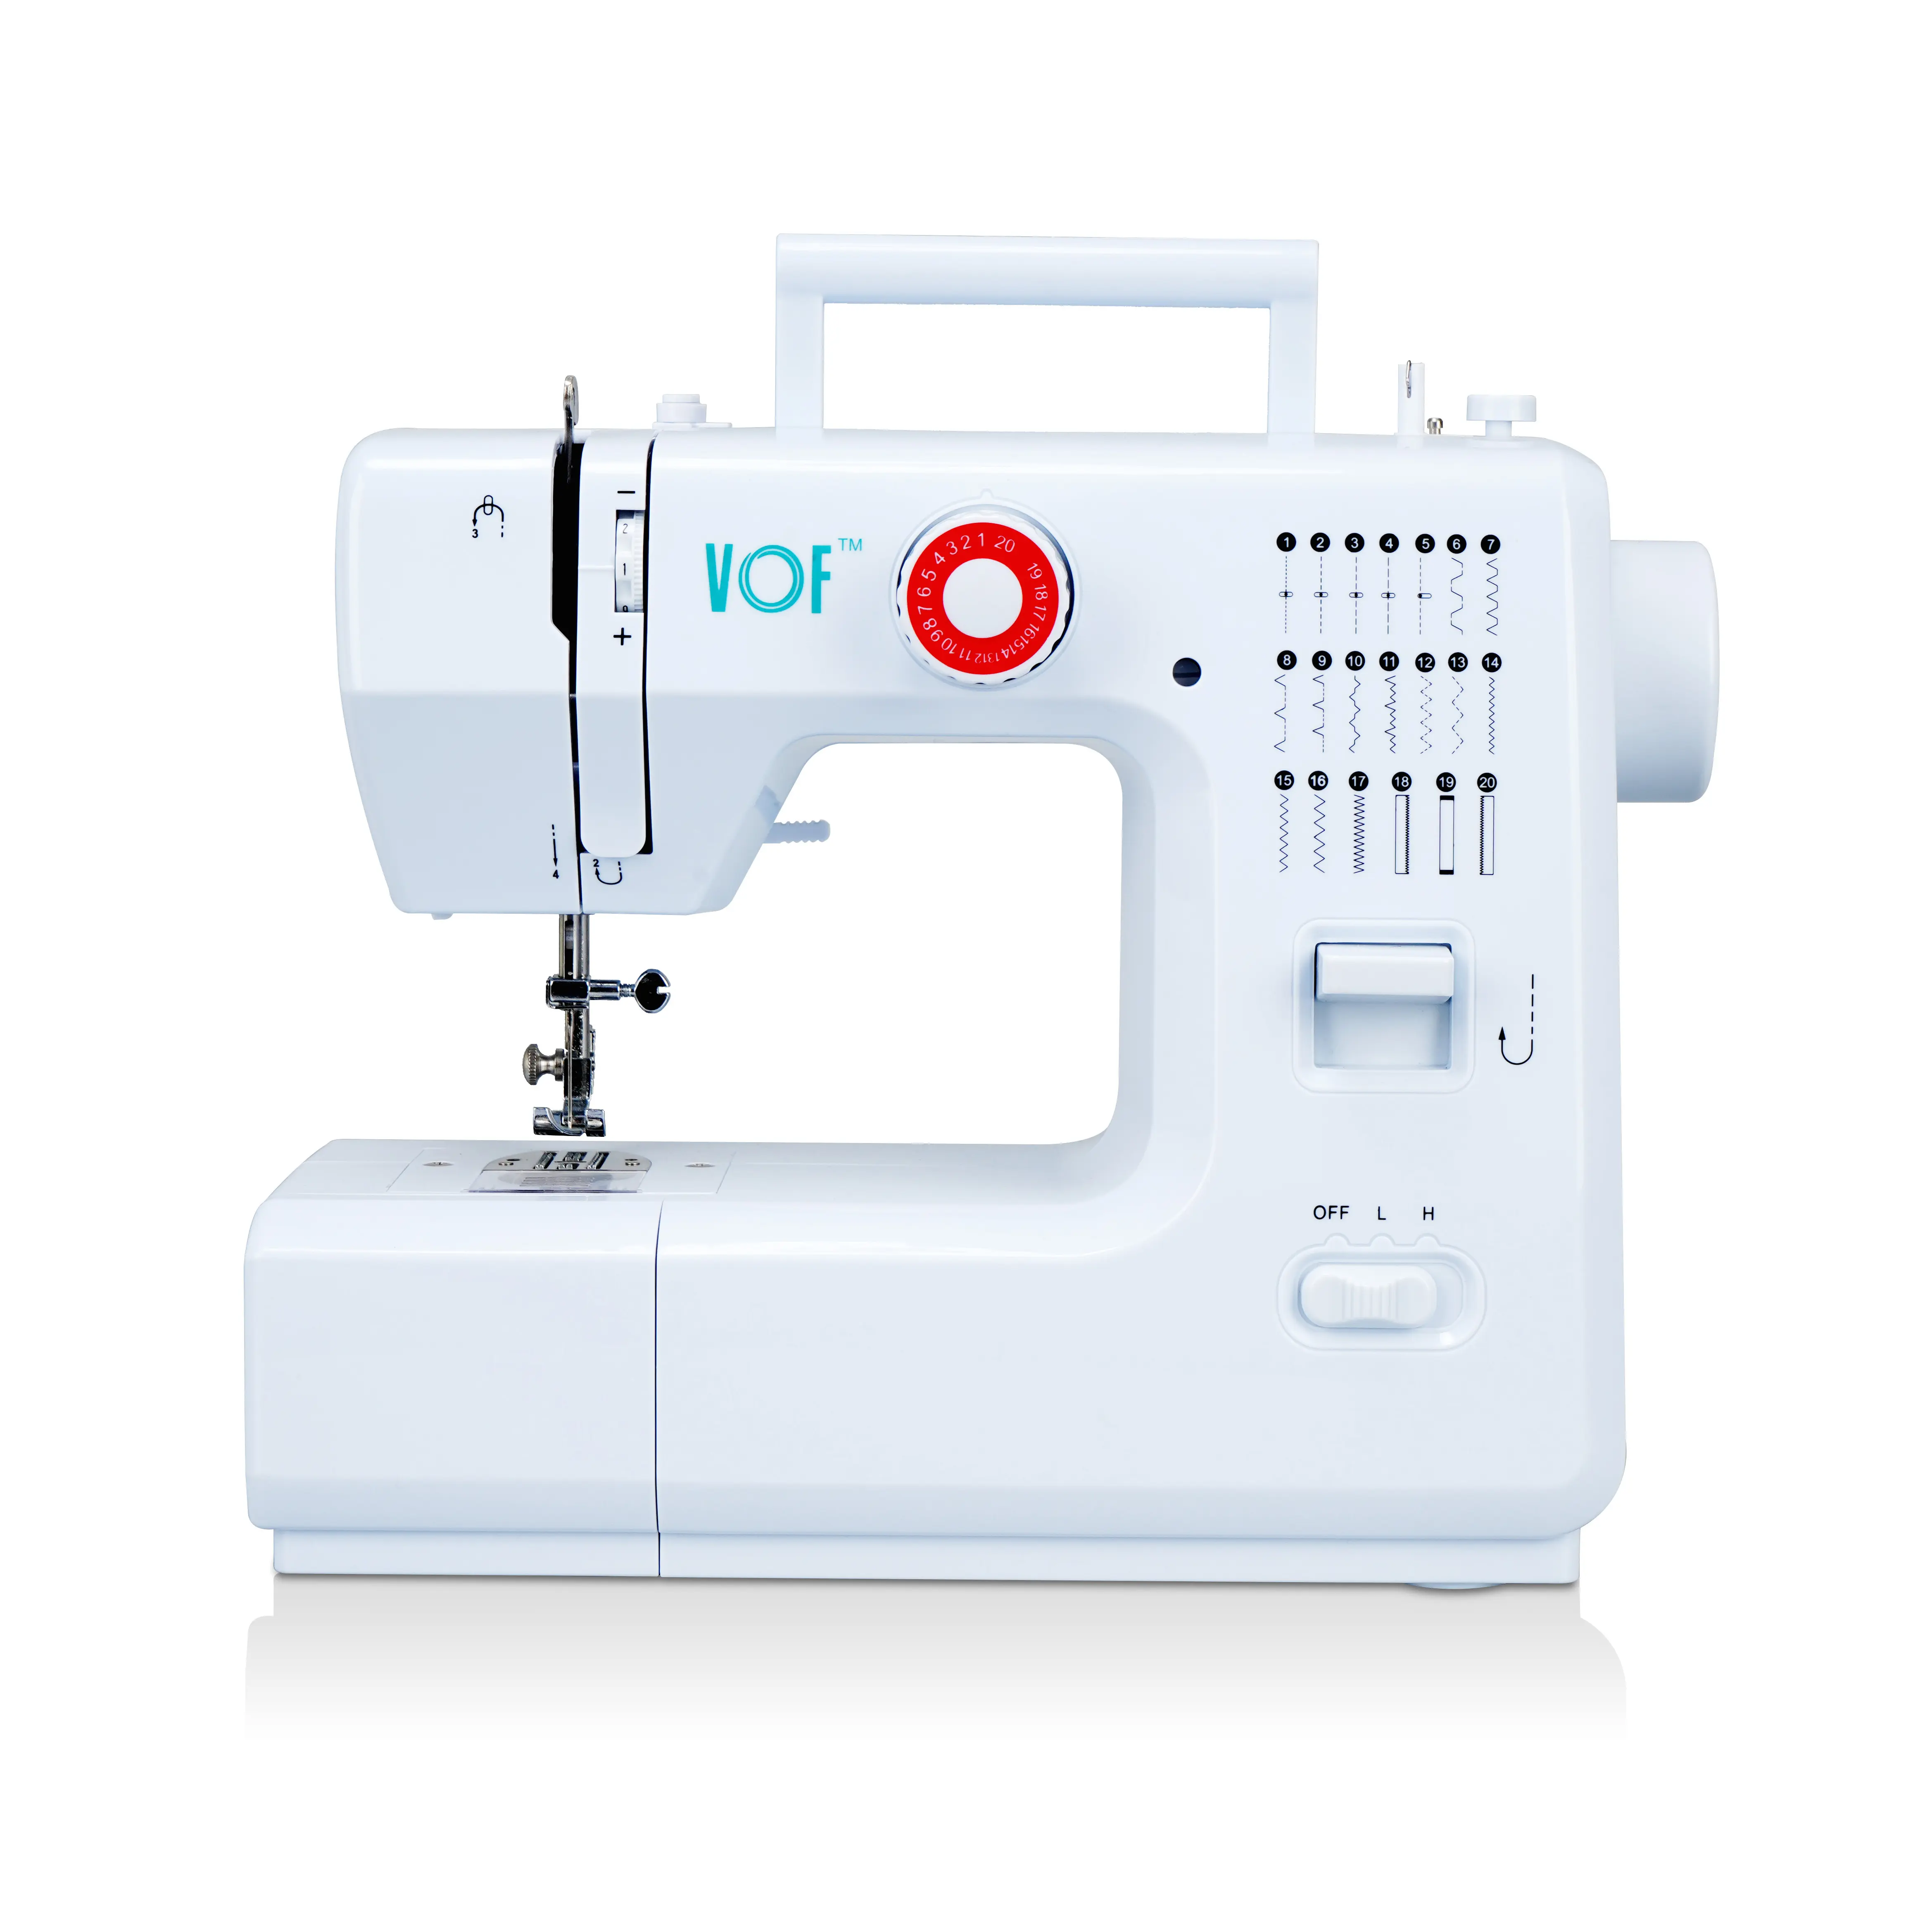 Recentemente VOF FHSM-618 uso doméstico overlock roupa luva máquina de costura preço